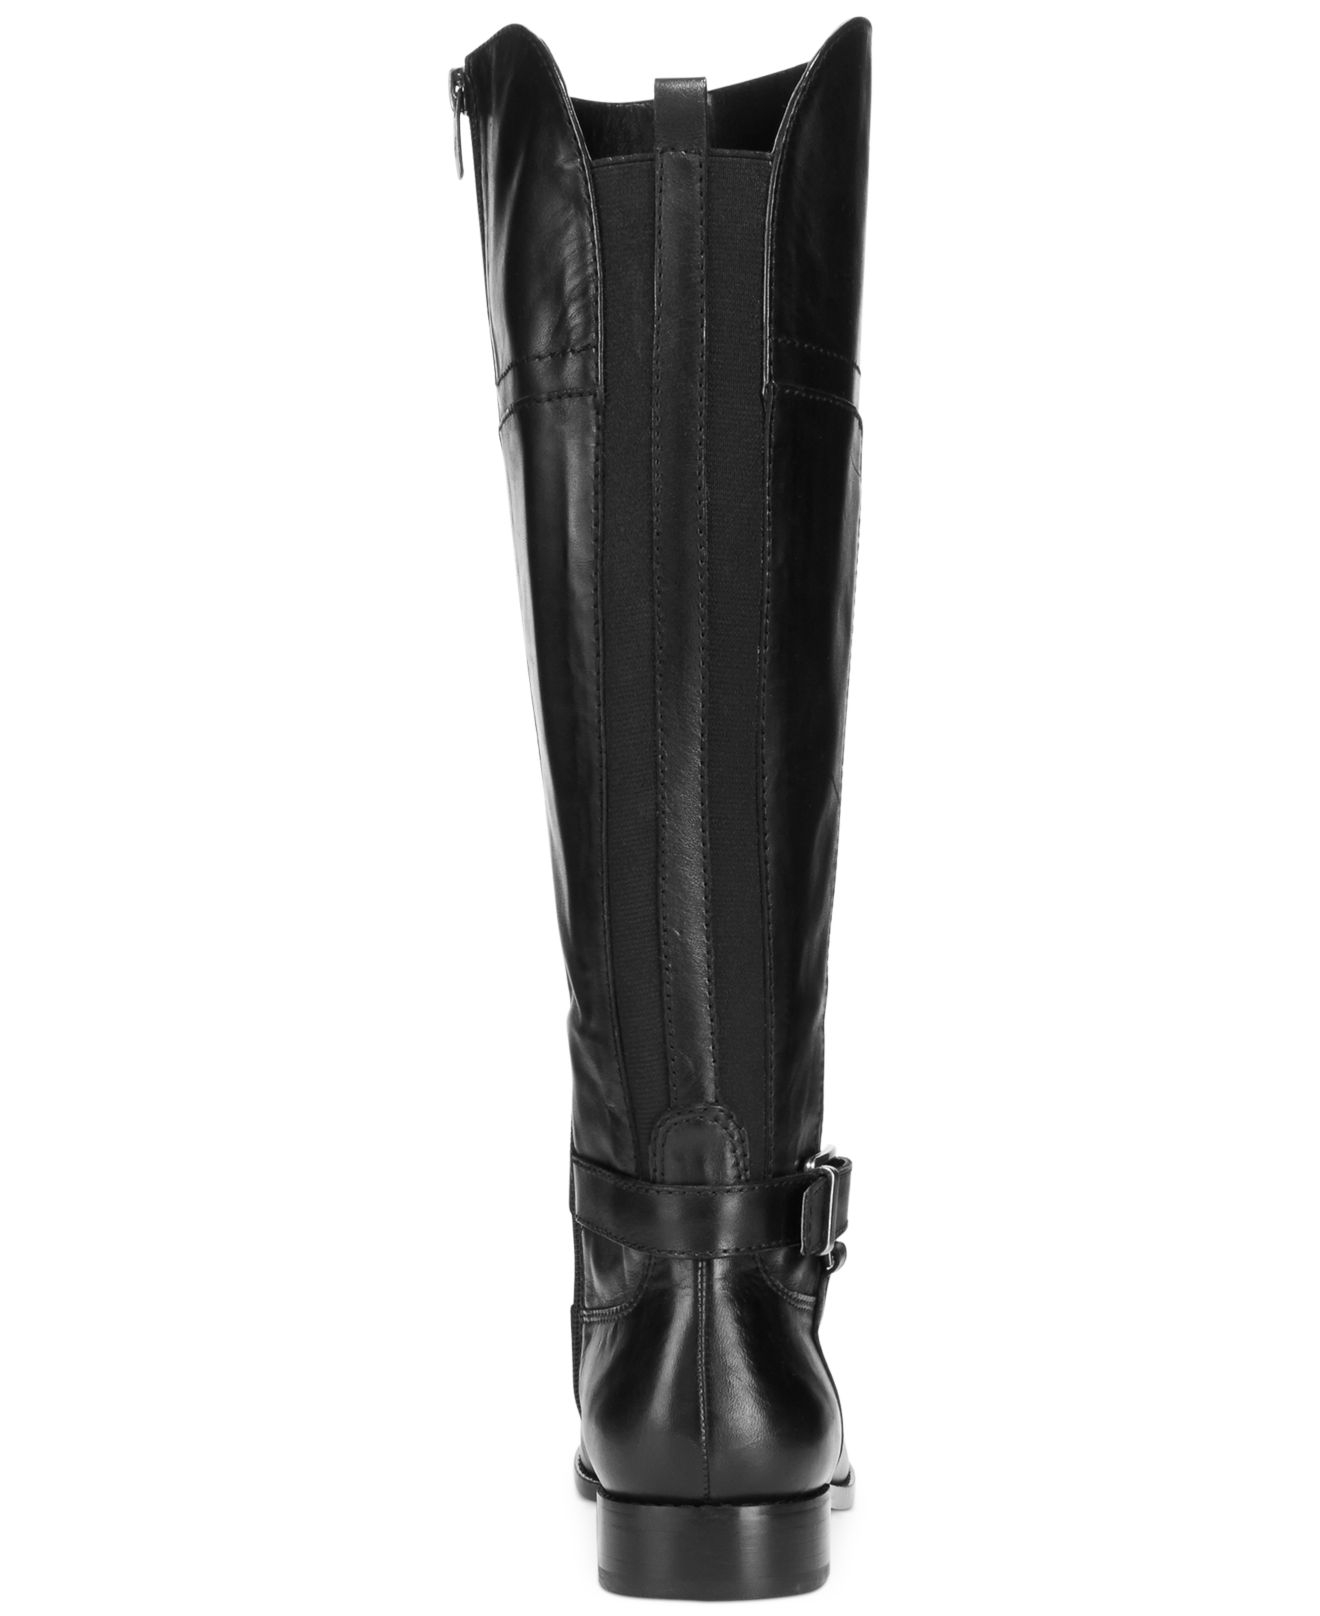 Lyst - Marc Fisher Aysha Tall Riding Boots in Black